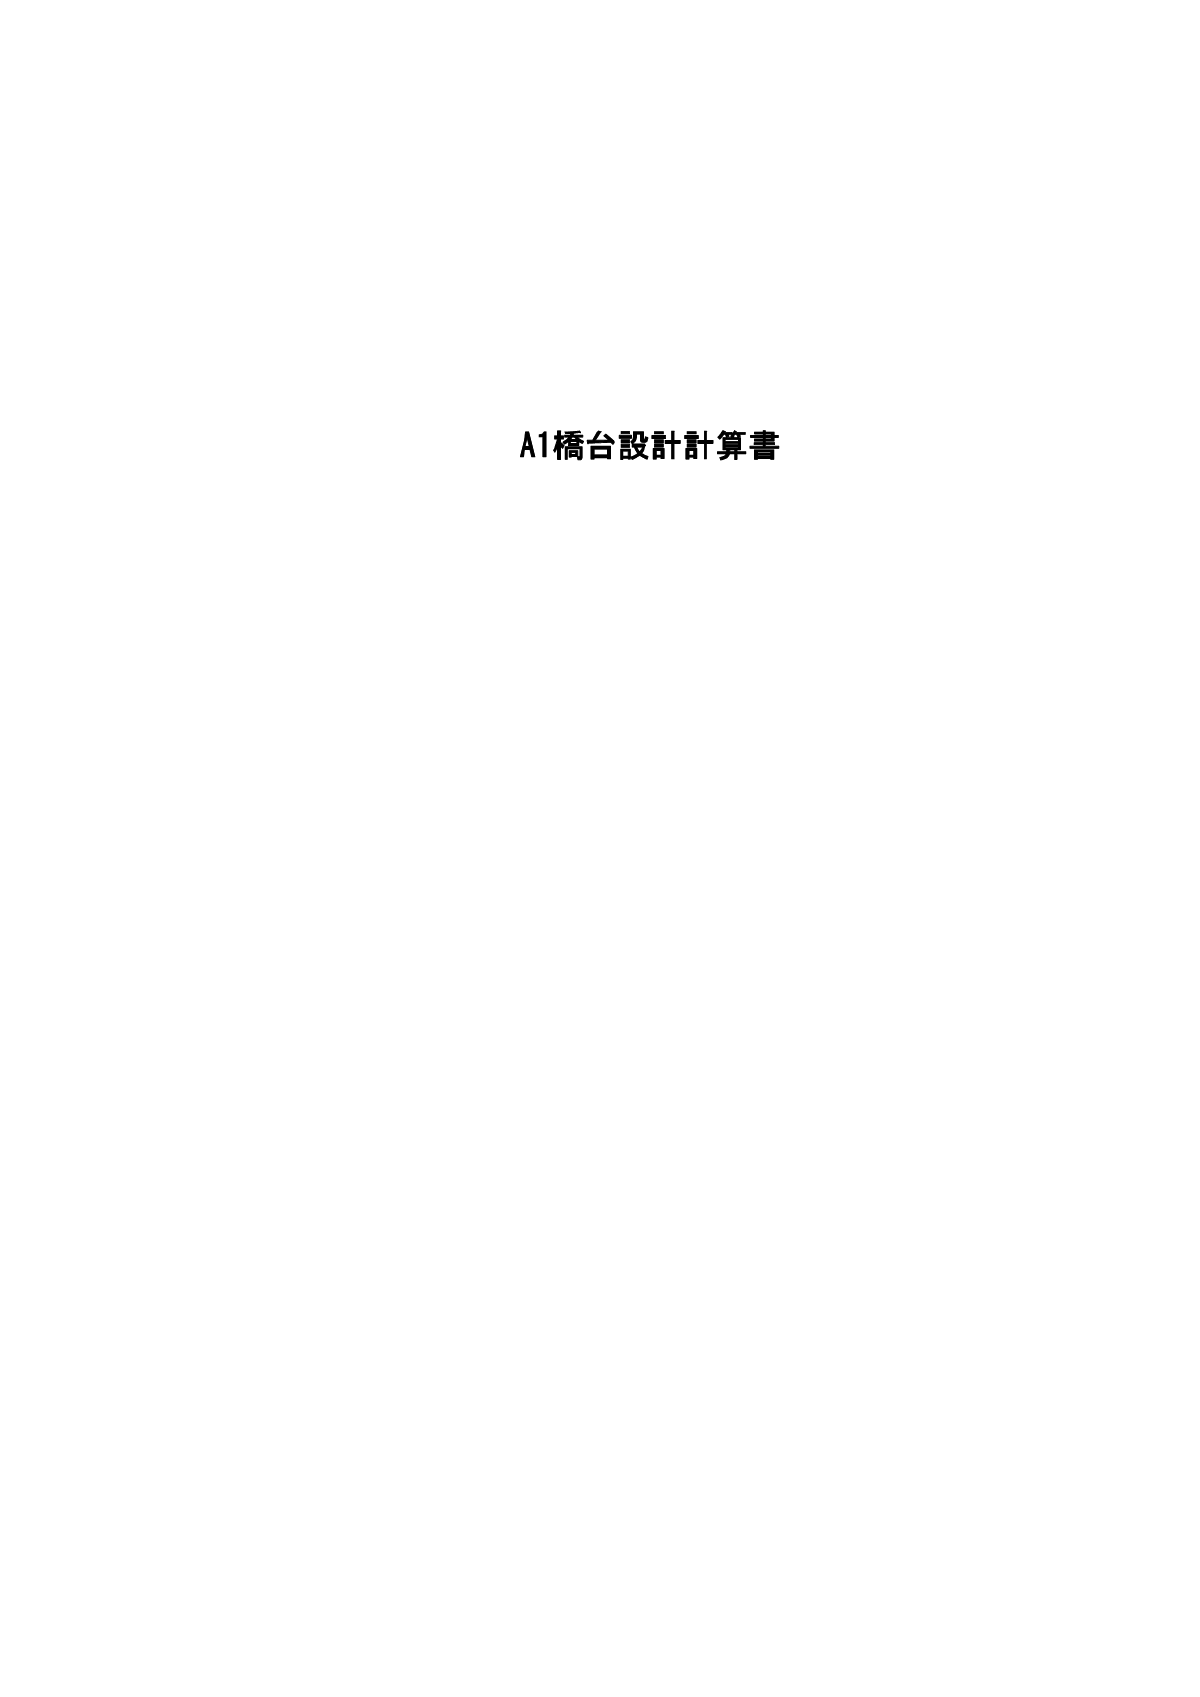 日本某逆T式橋台(段差フーチング)詳細設計計算書